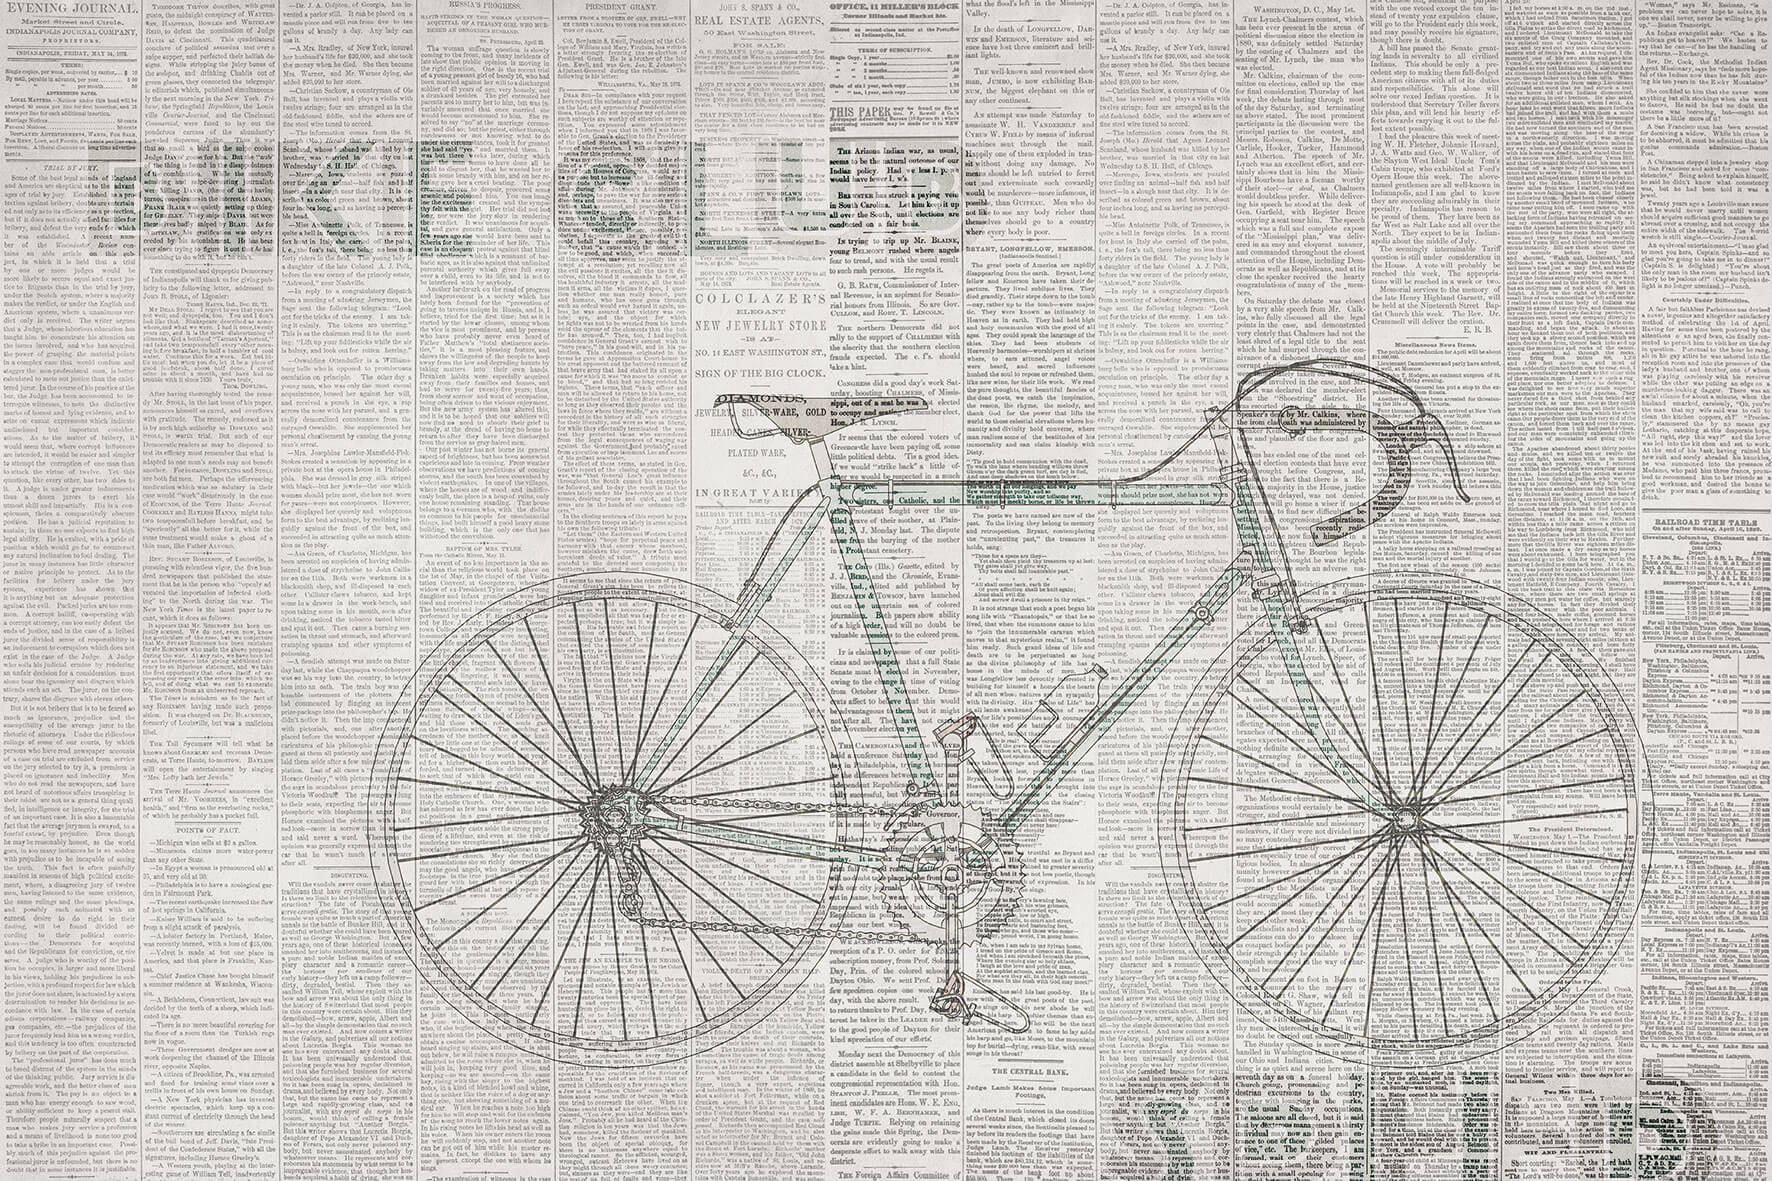 Tapet Bike club | GLAMORA